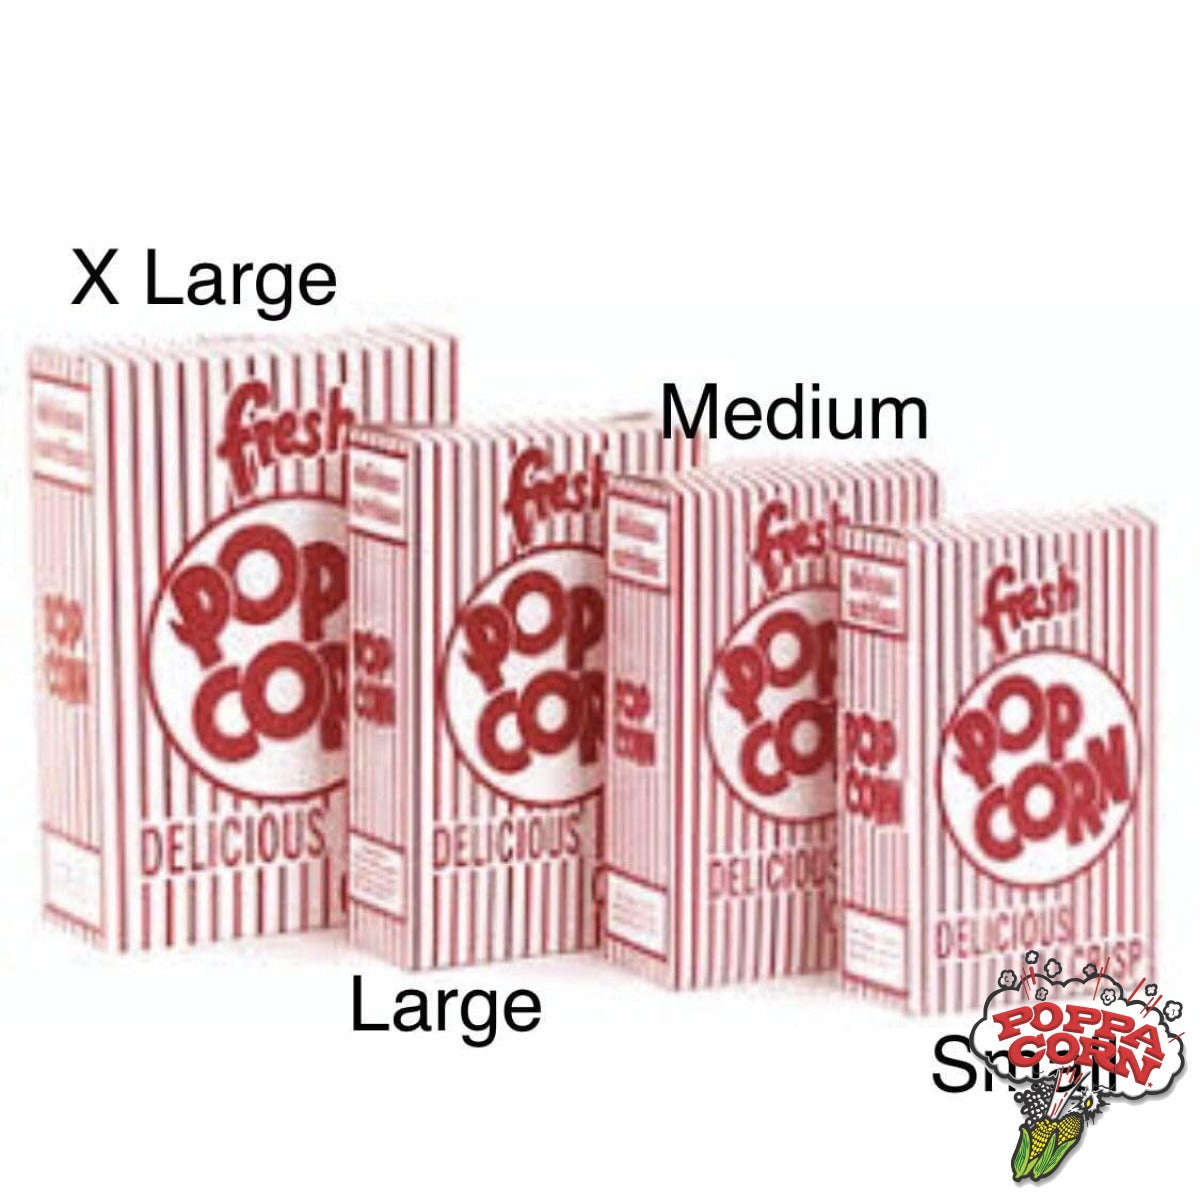 BOX004 - X-Large Red & White Striped Box - 250/Case - Poppa Corn Corp